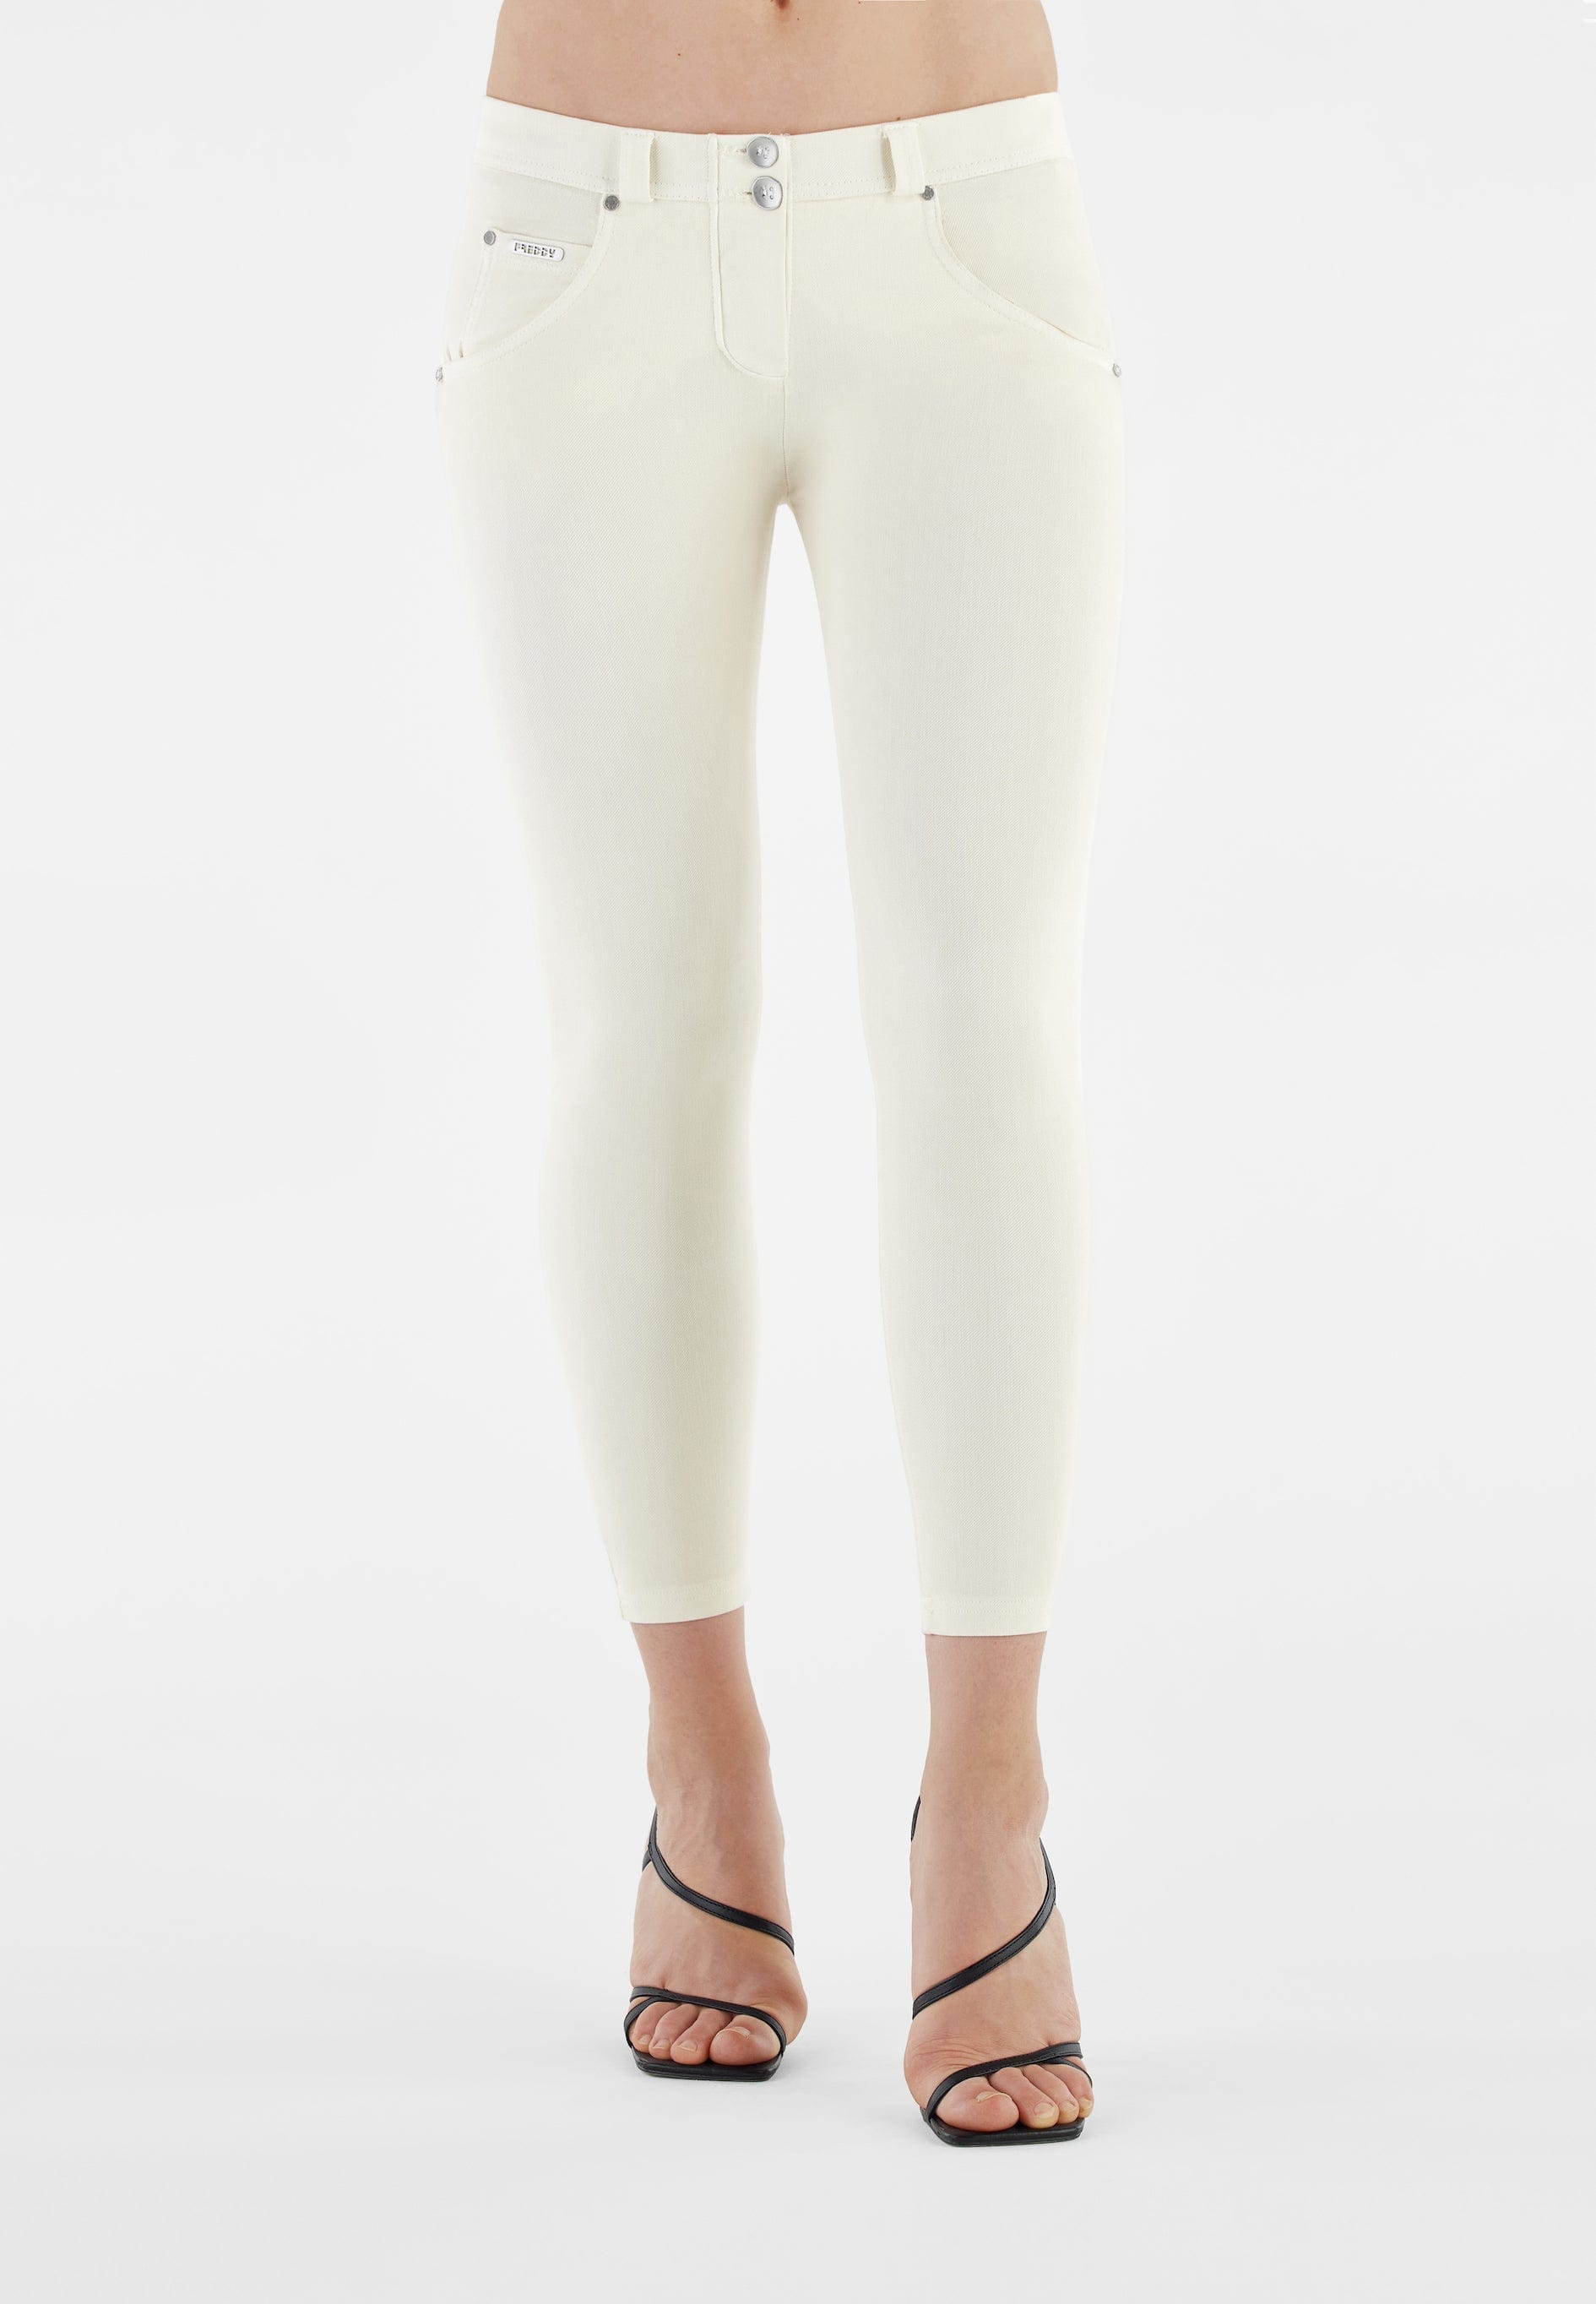 WR.UP® Snug Jeans - Mid Rise - 7/8 Length - White 2